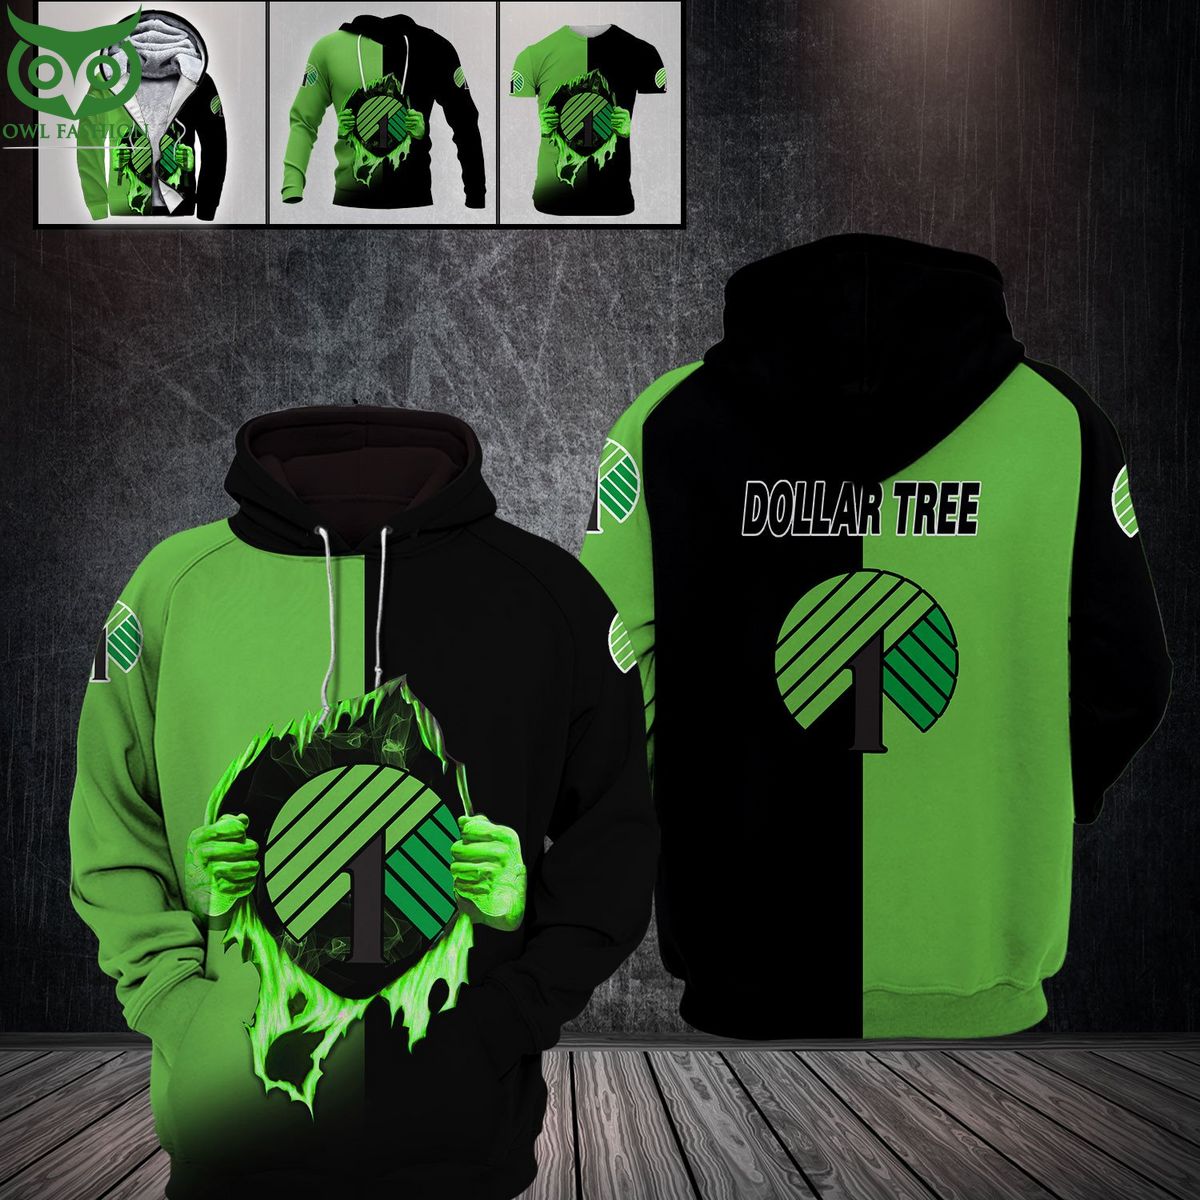 Dollar Tree Green Black 3D Shirt Great, I liked it